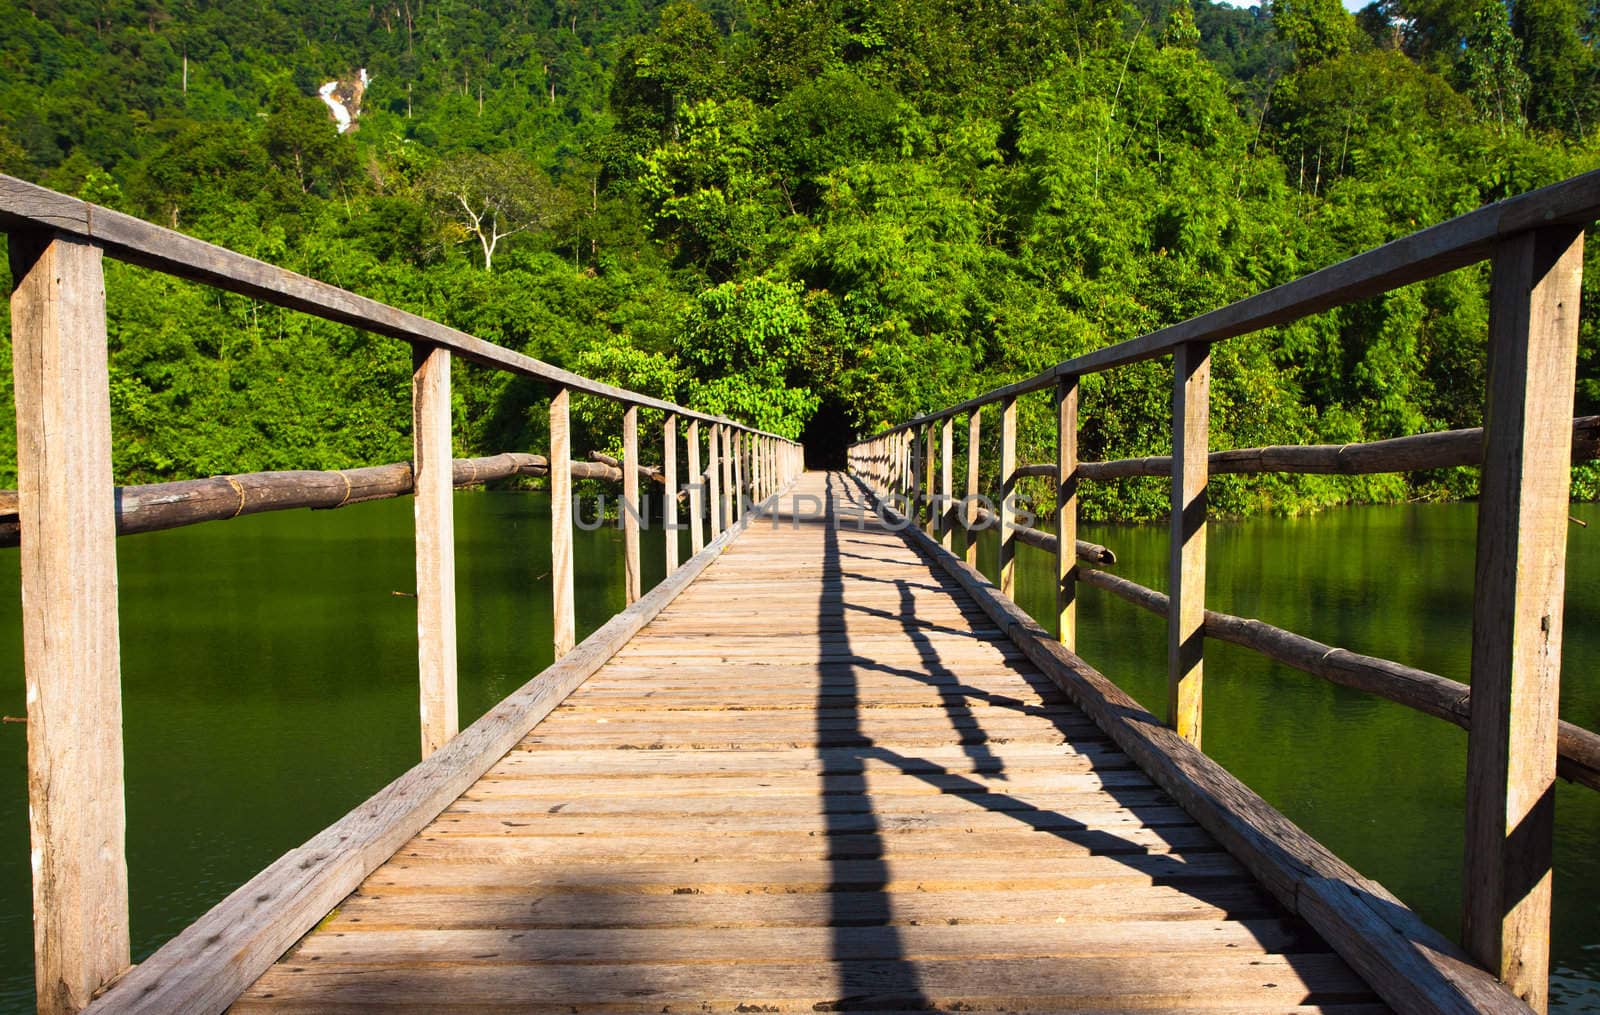 Bridge to the jungle, Chantaburi eastern of Thailand by Suriyaphoto